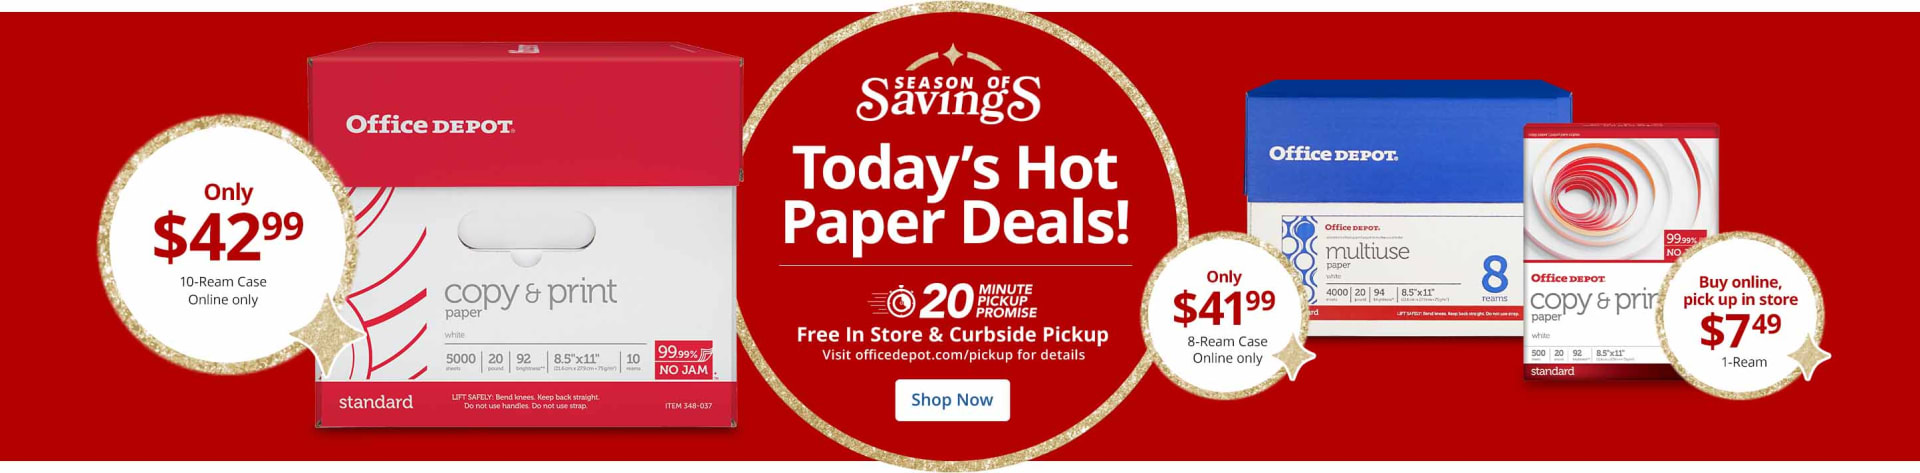 Today's Hot Paper Deals!